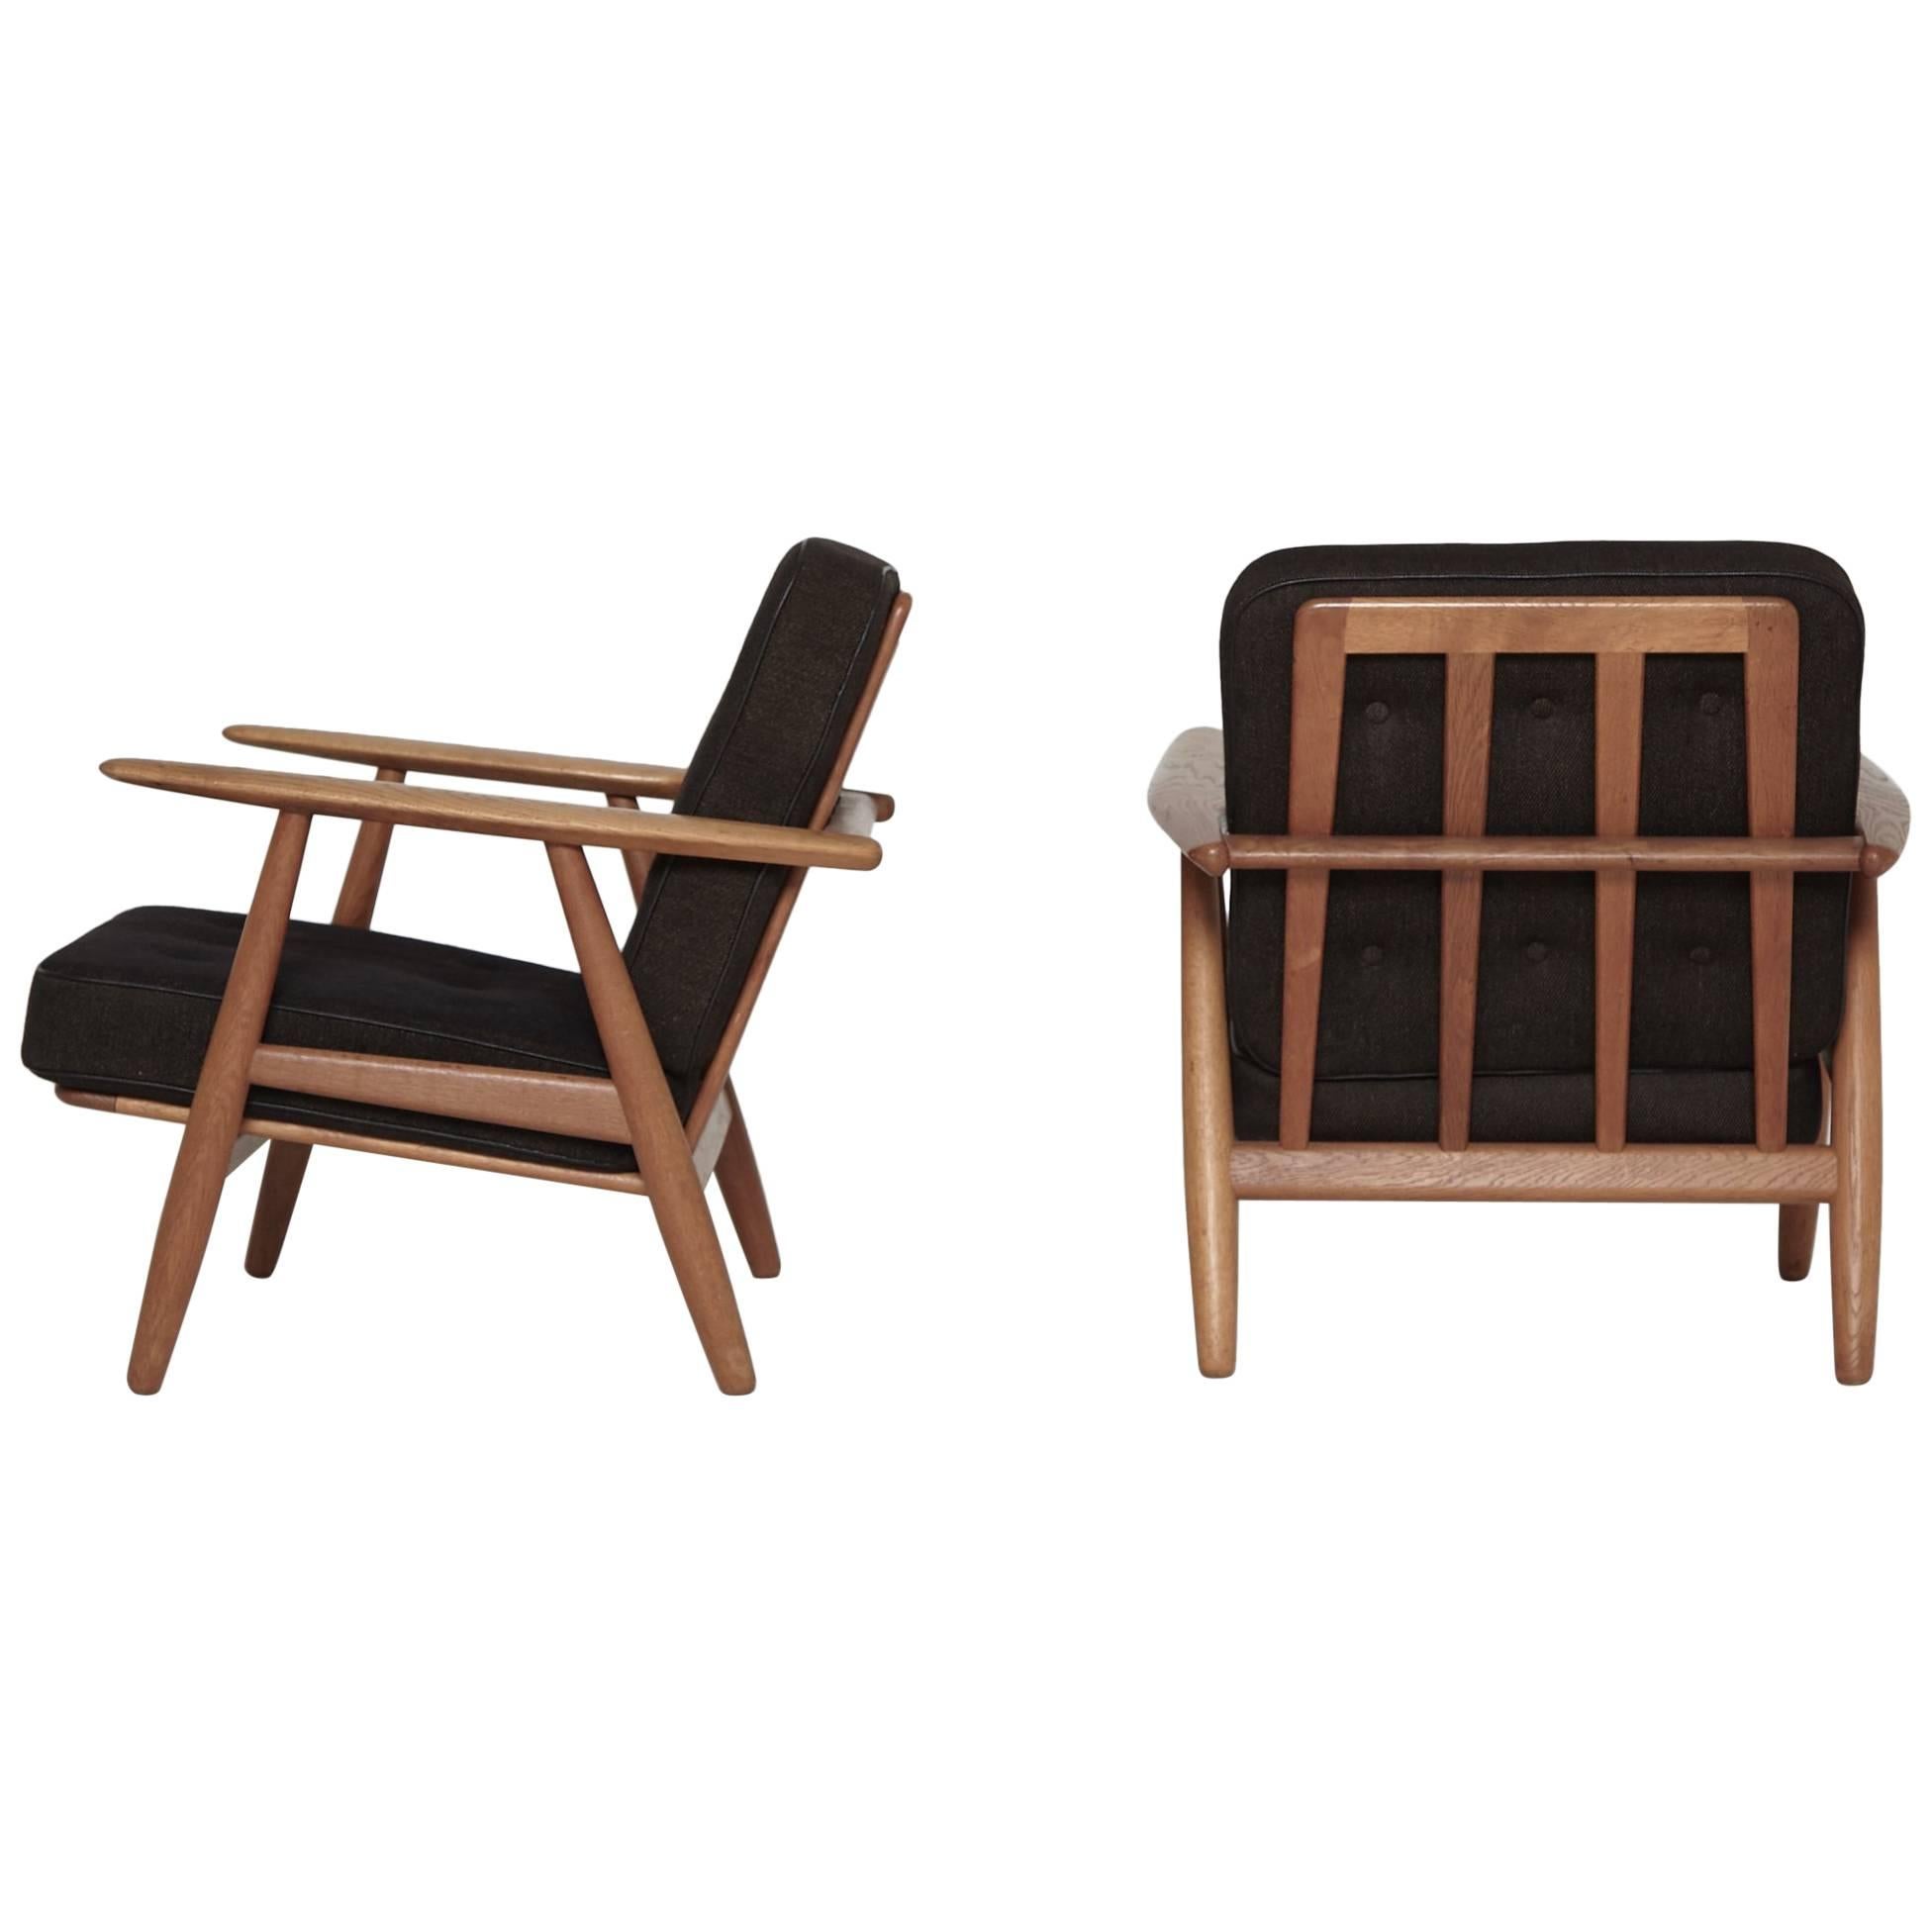 Original Pair of Hans Wegner GE-240 Cigar Chairs, Denmark, 1960s